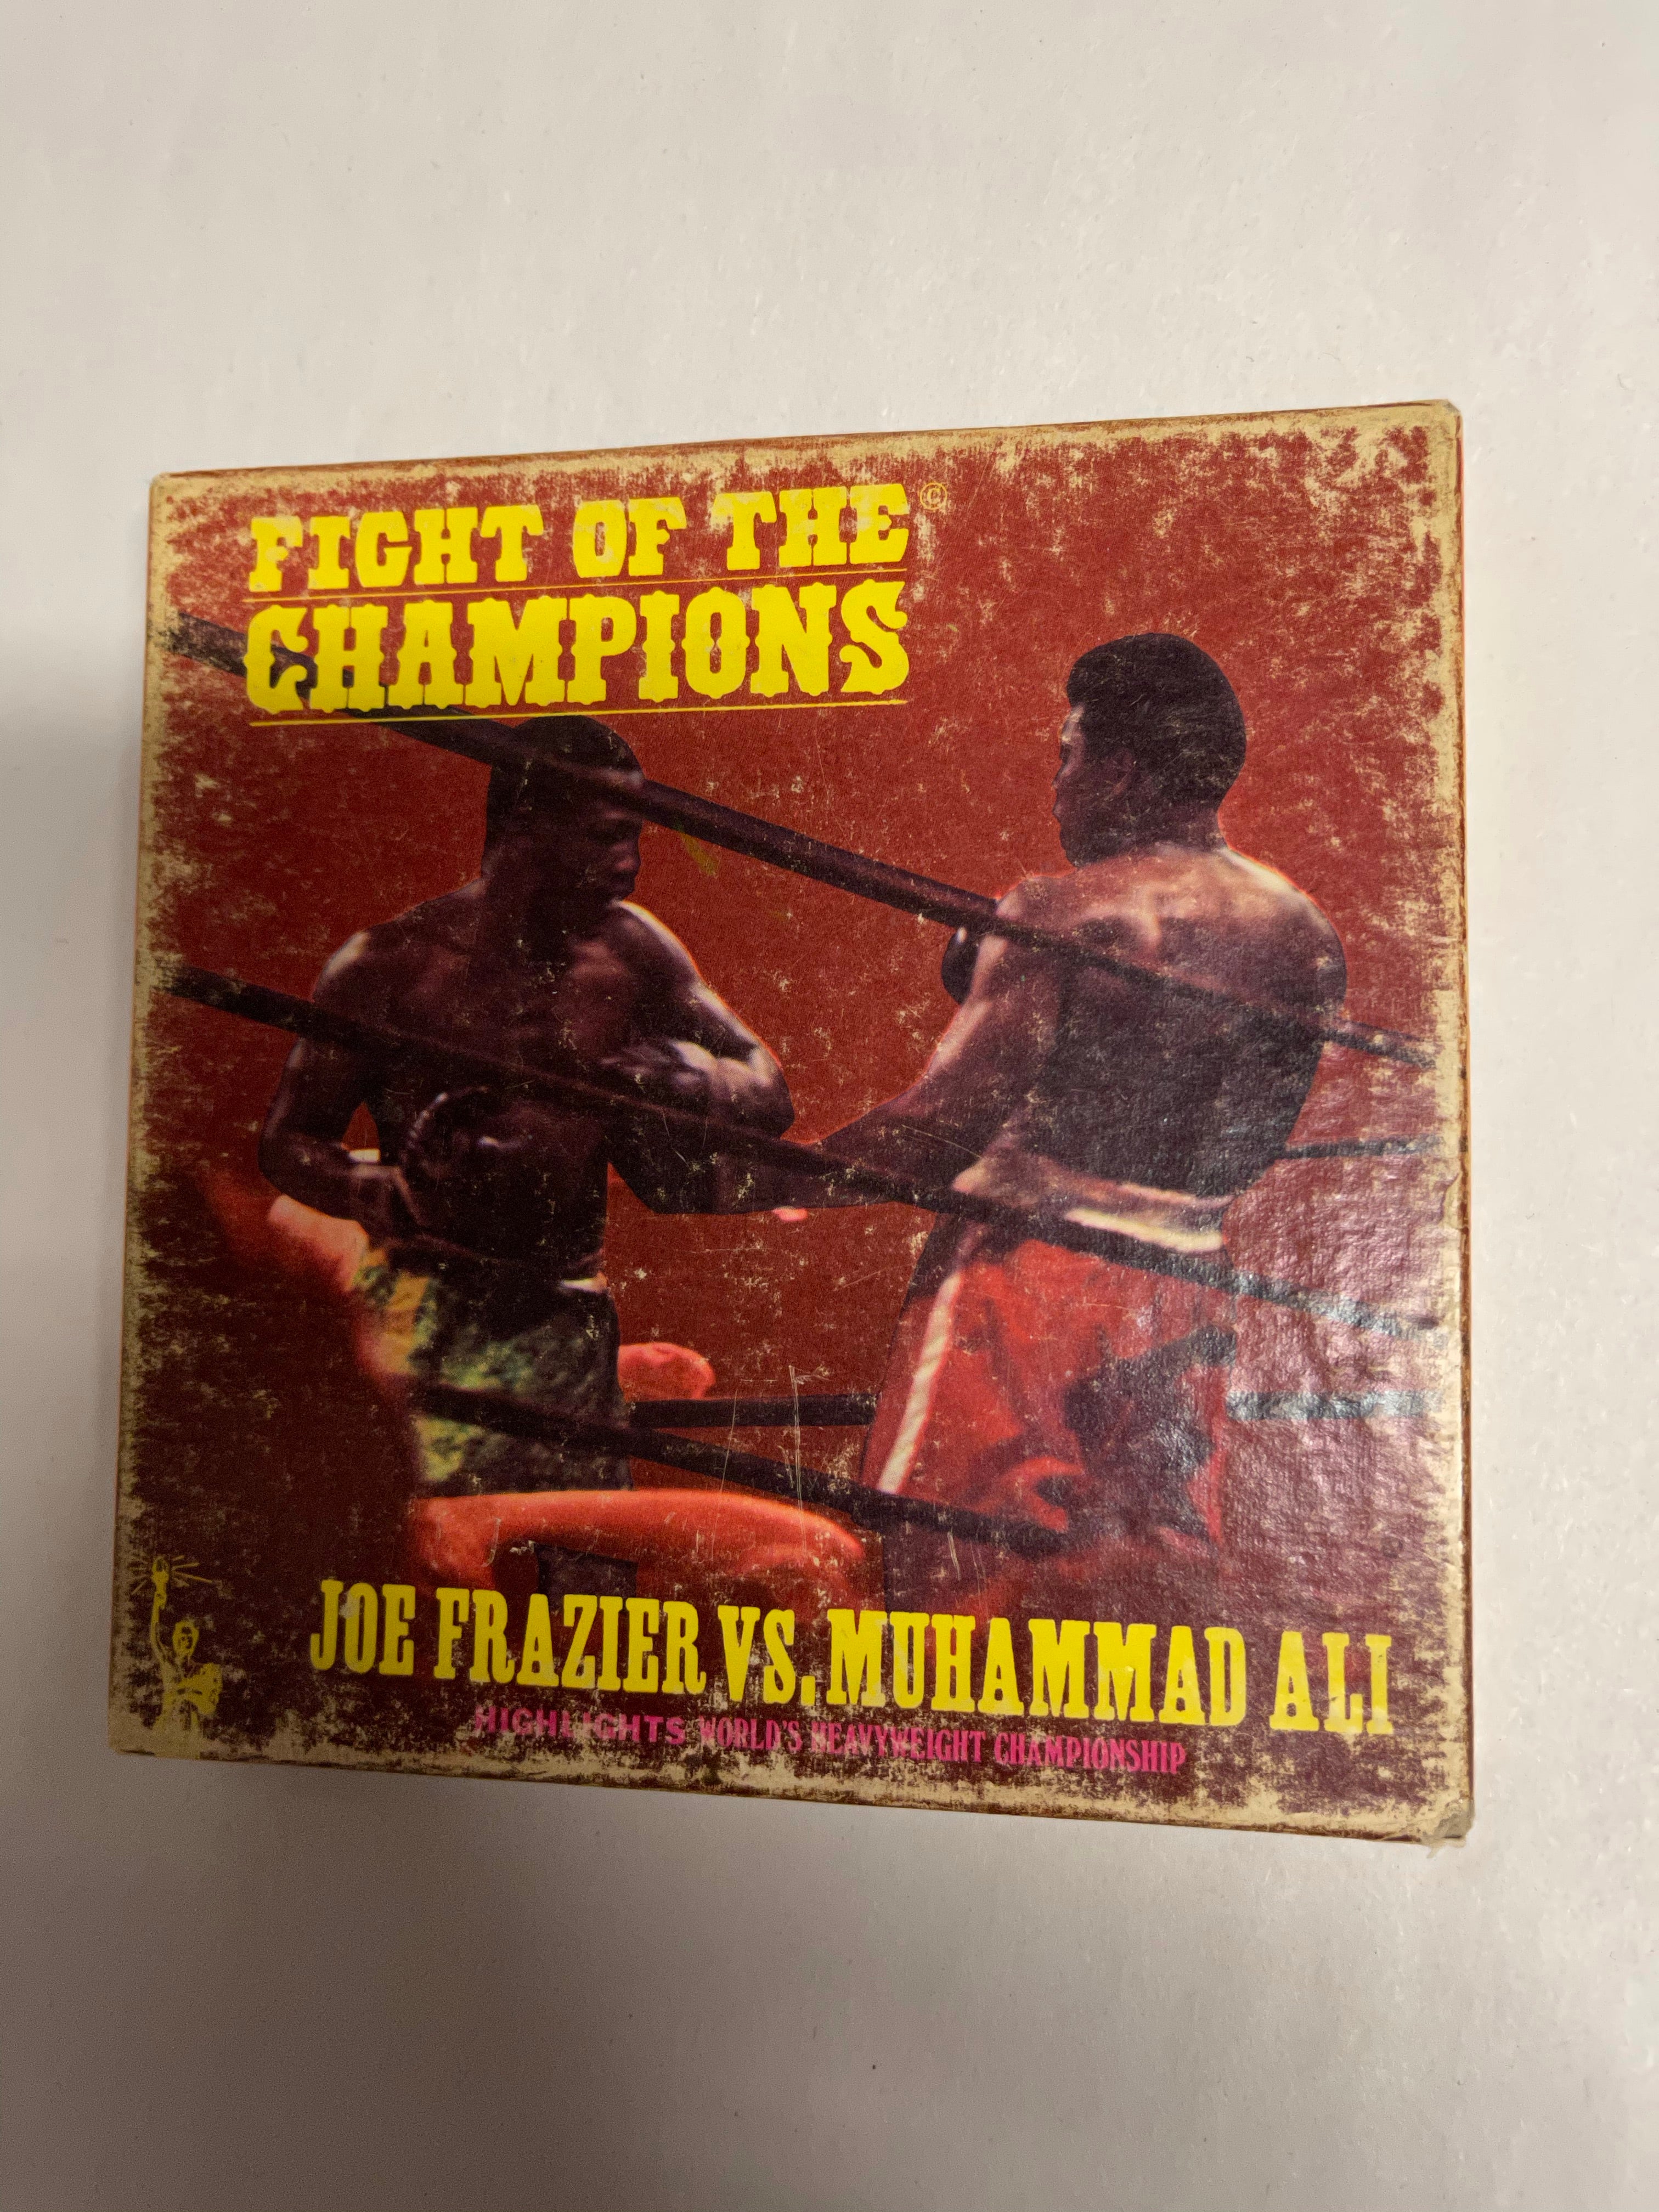 Muhammad Ali vs Joe Frazier original Super 8 fight reel 1970s